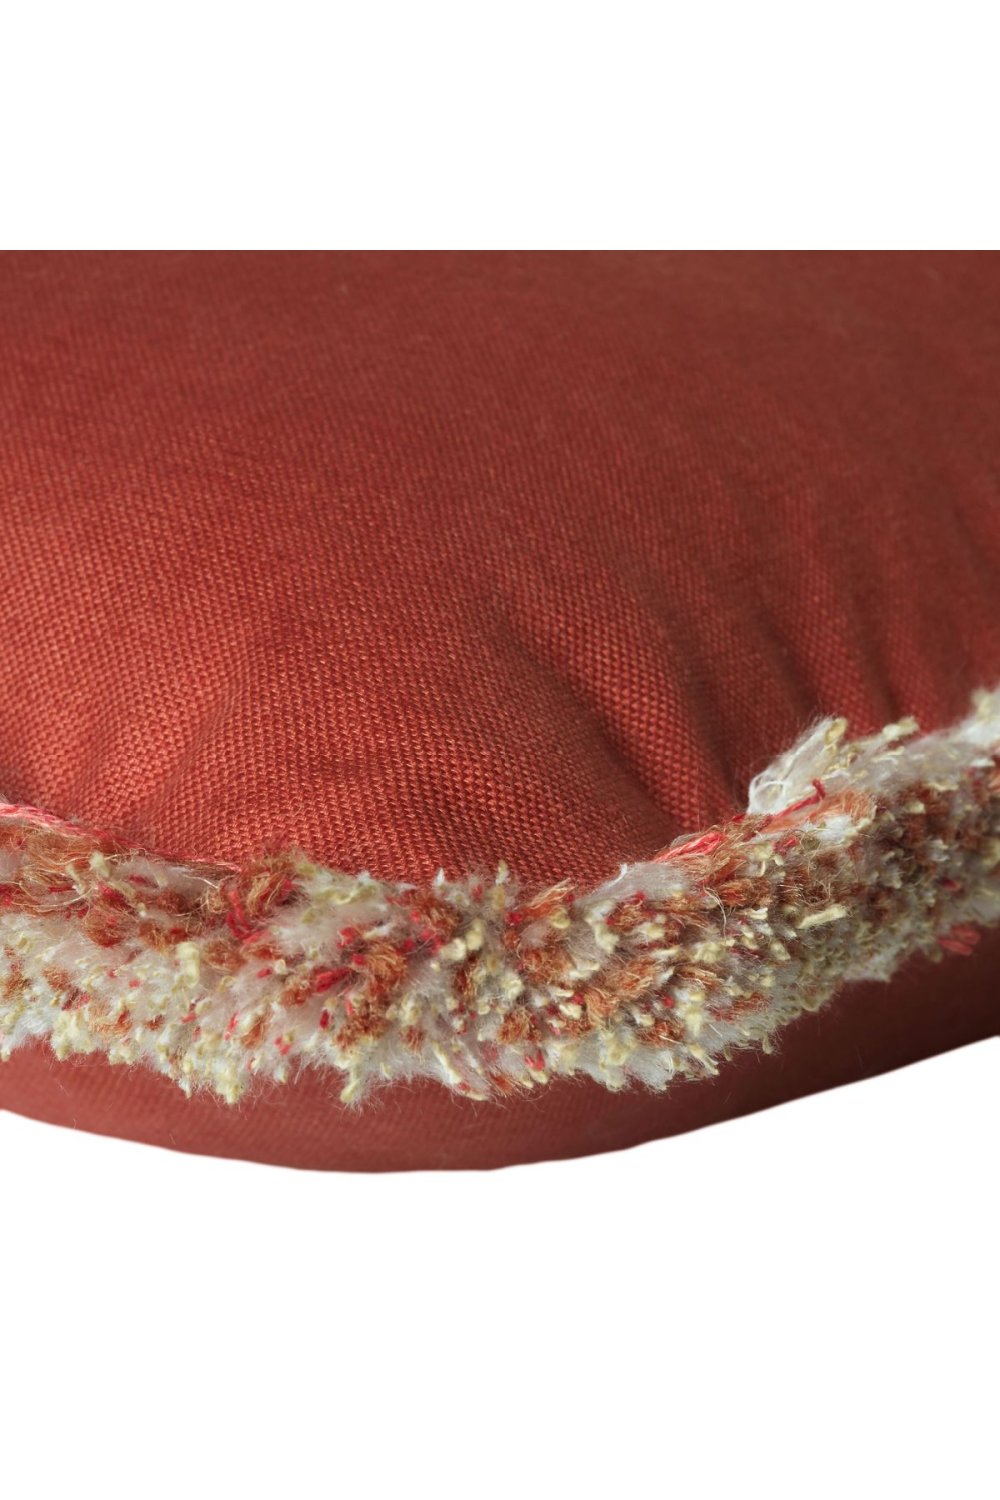 Fringed Linen Cushion | Andrew Martin Beagle | OROA 